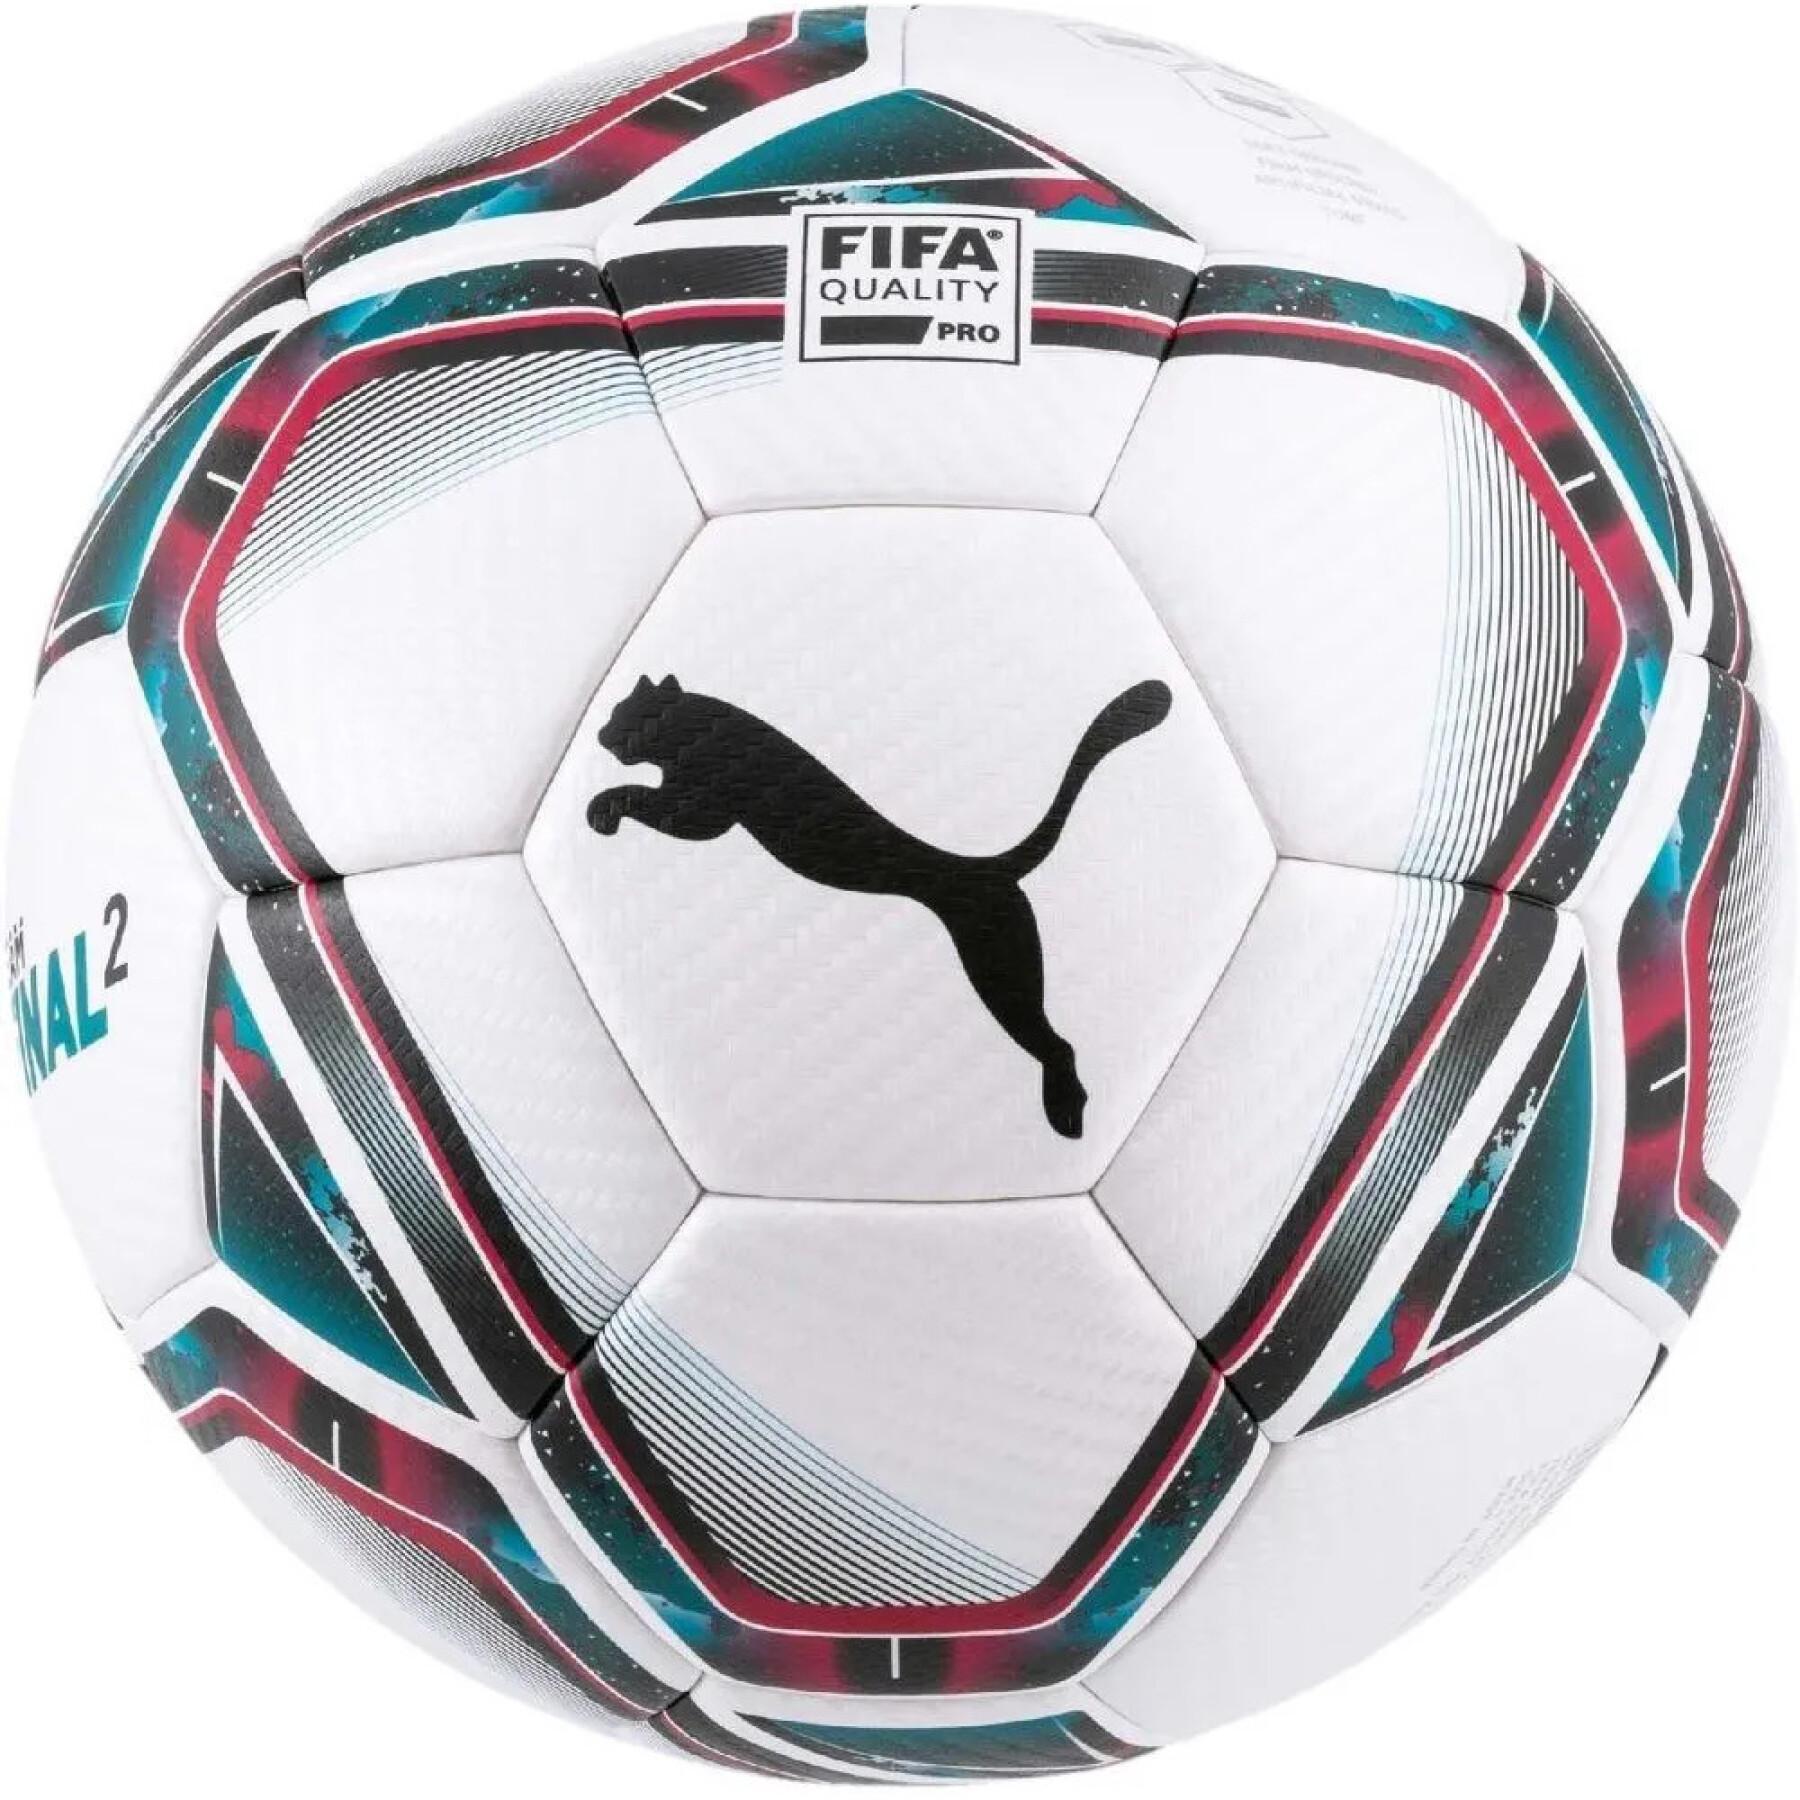 Balon Puma Final 2 Fifa Quality Pro